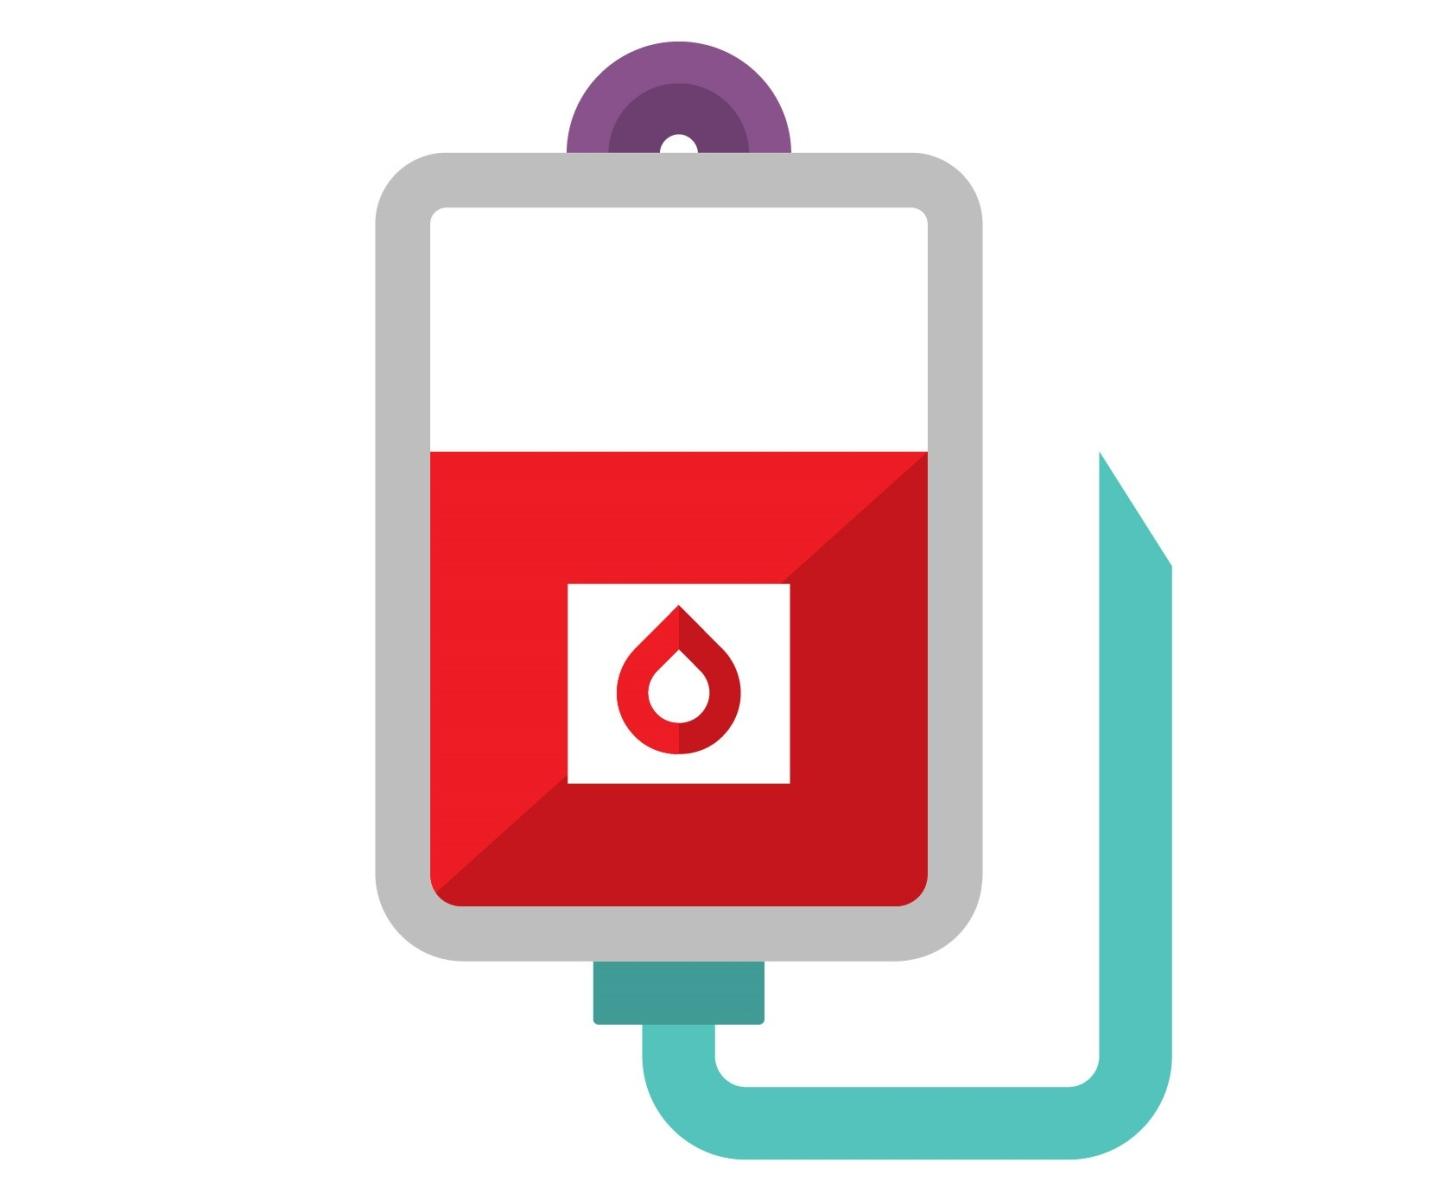 Blood donation bag icon